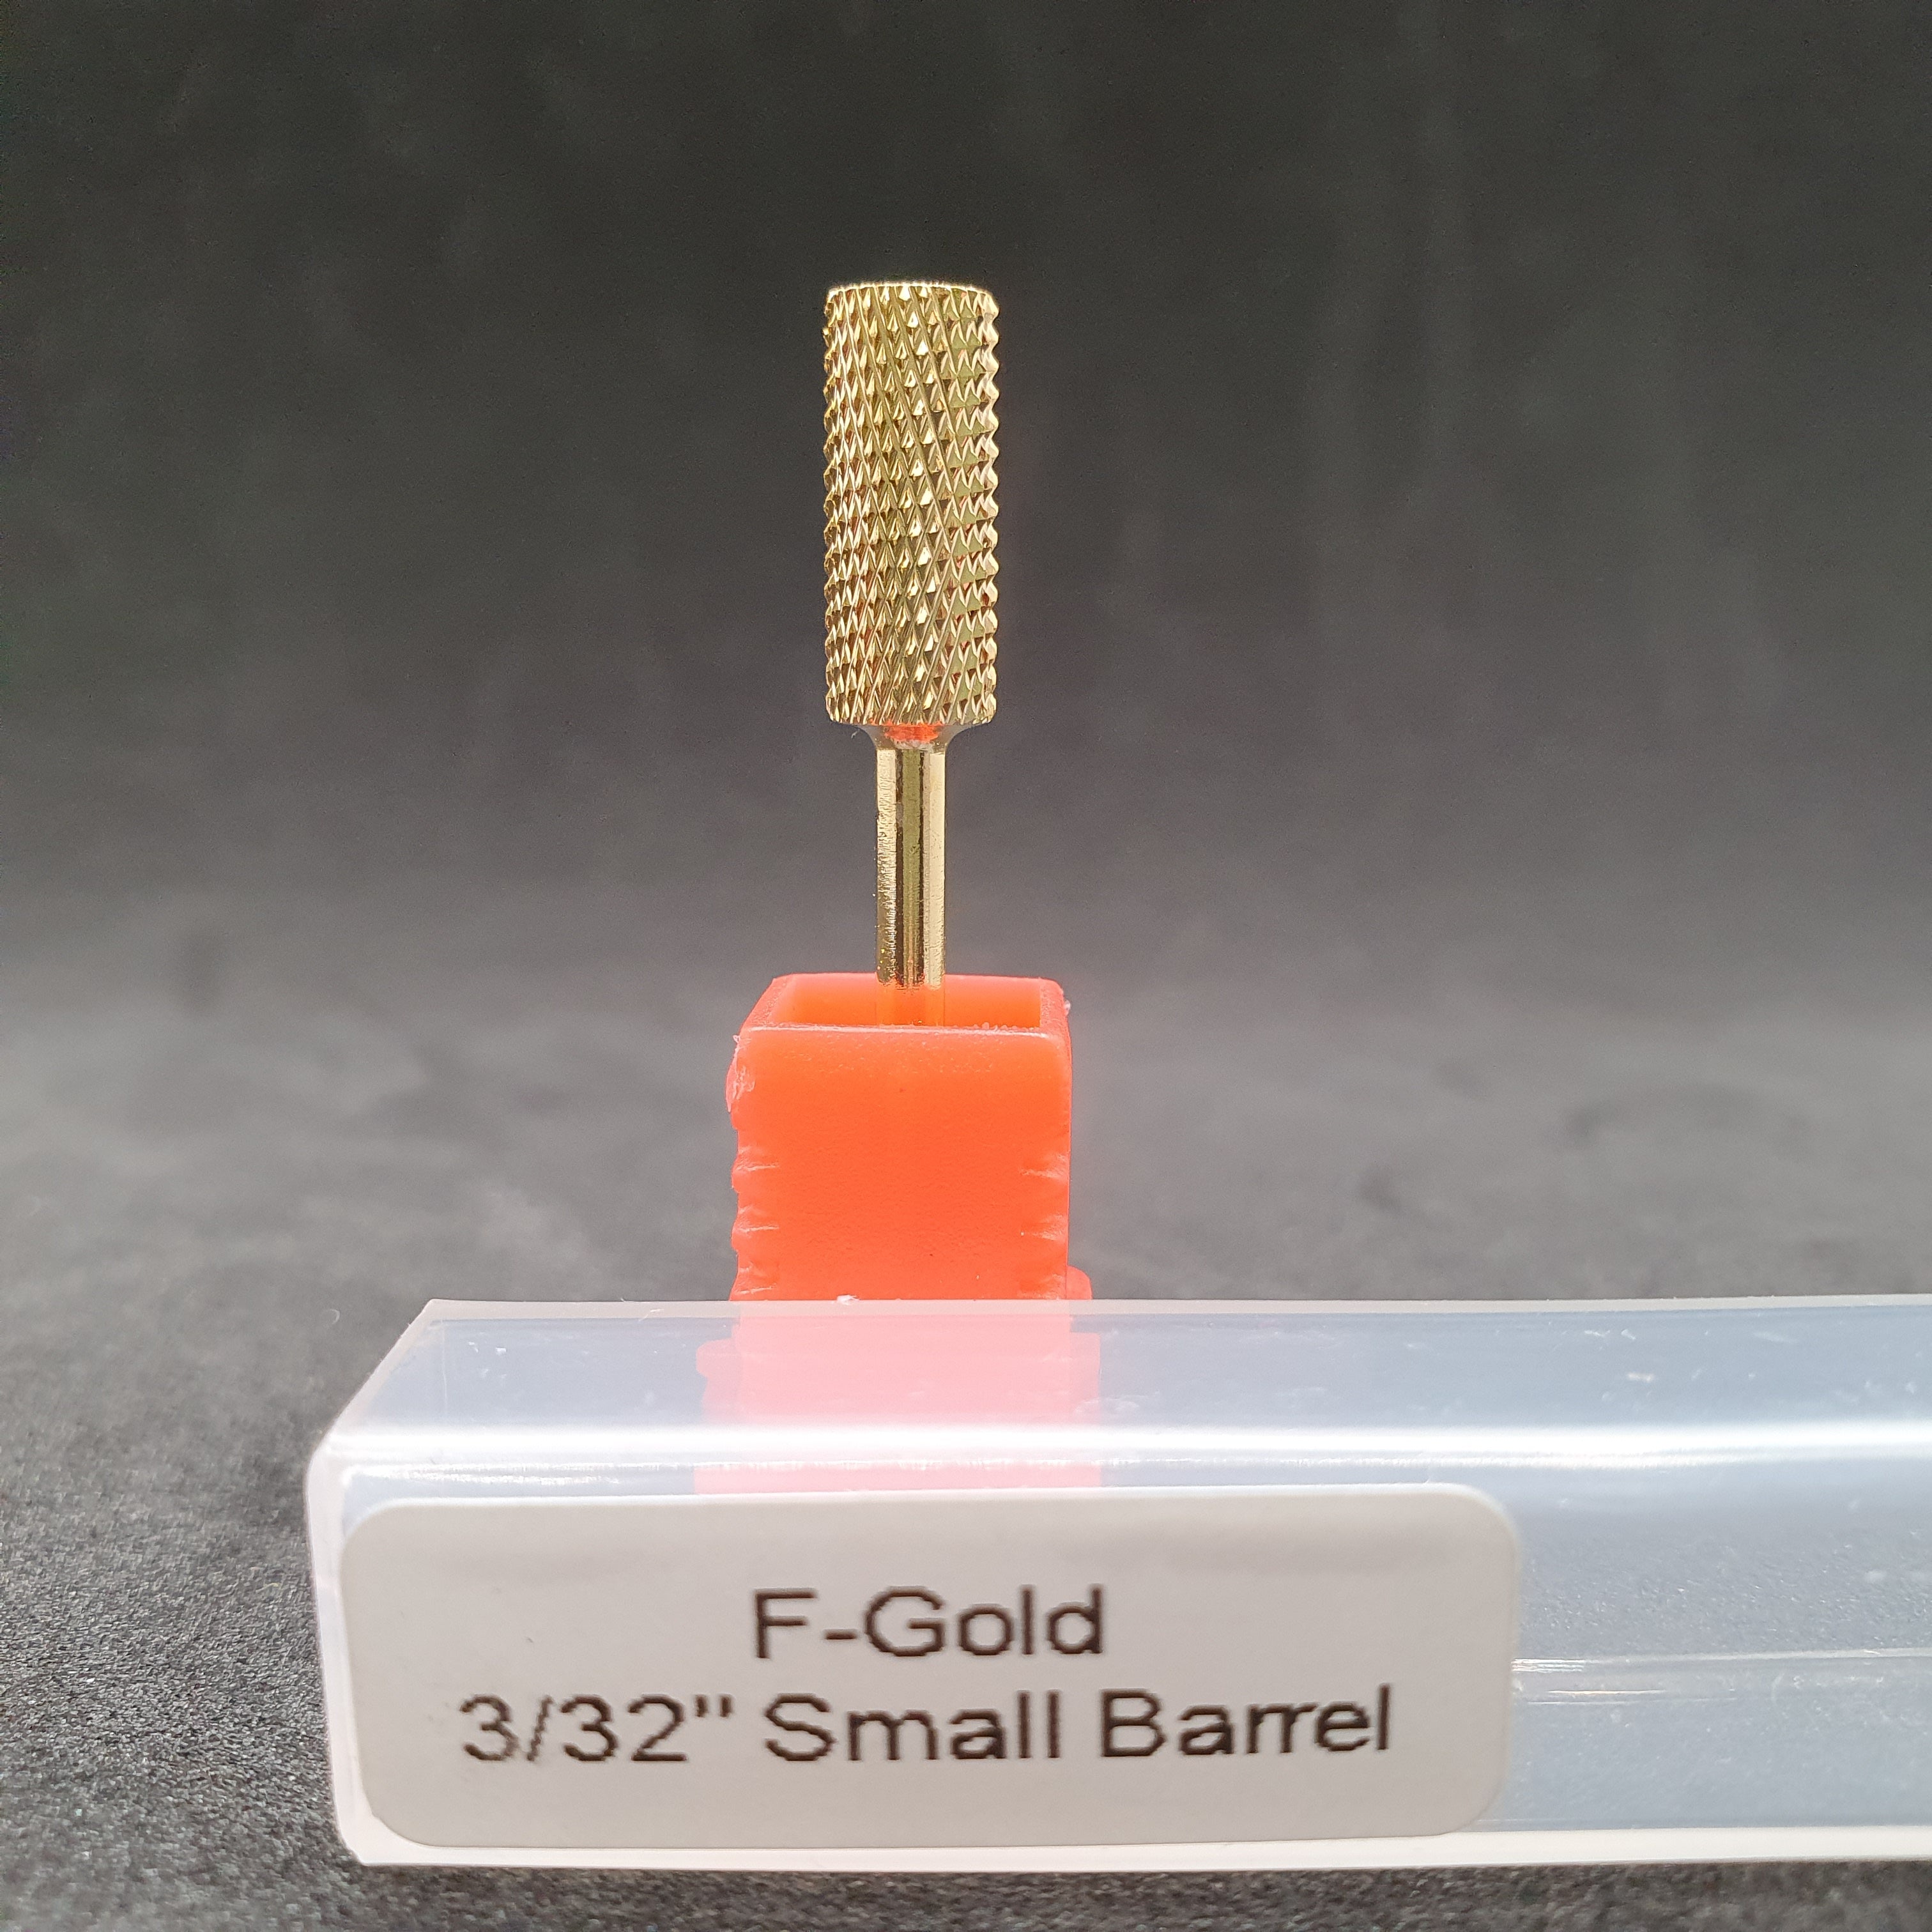 F-GOLD 3/32" SMALL BARREL